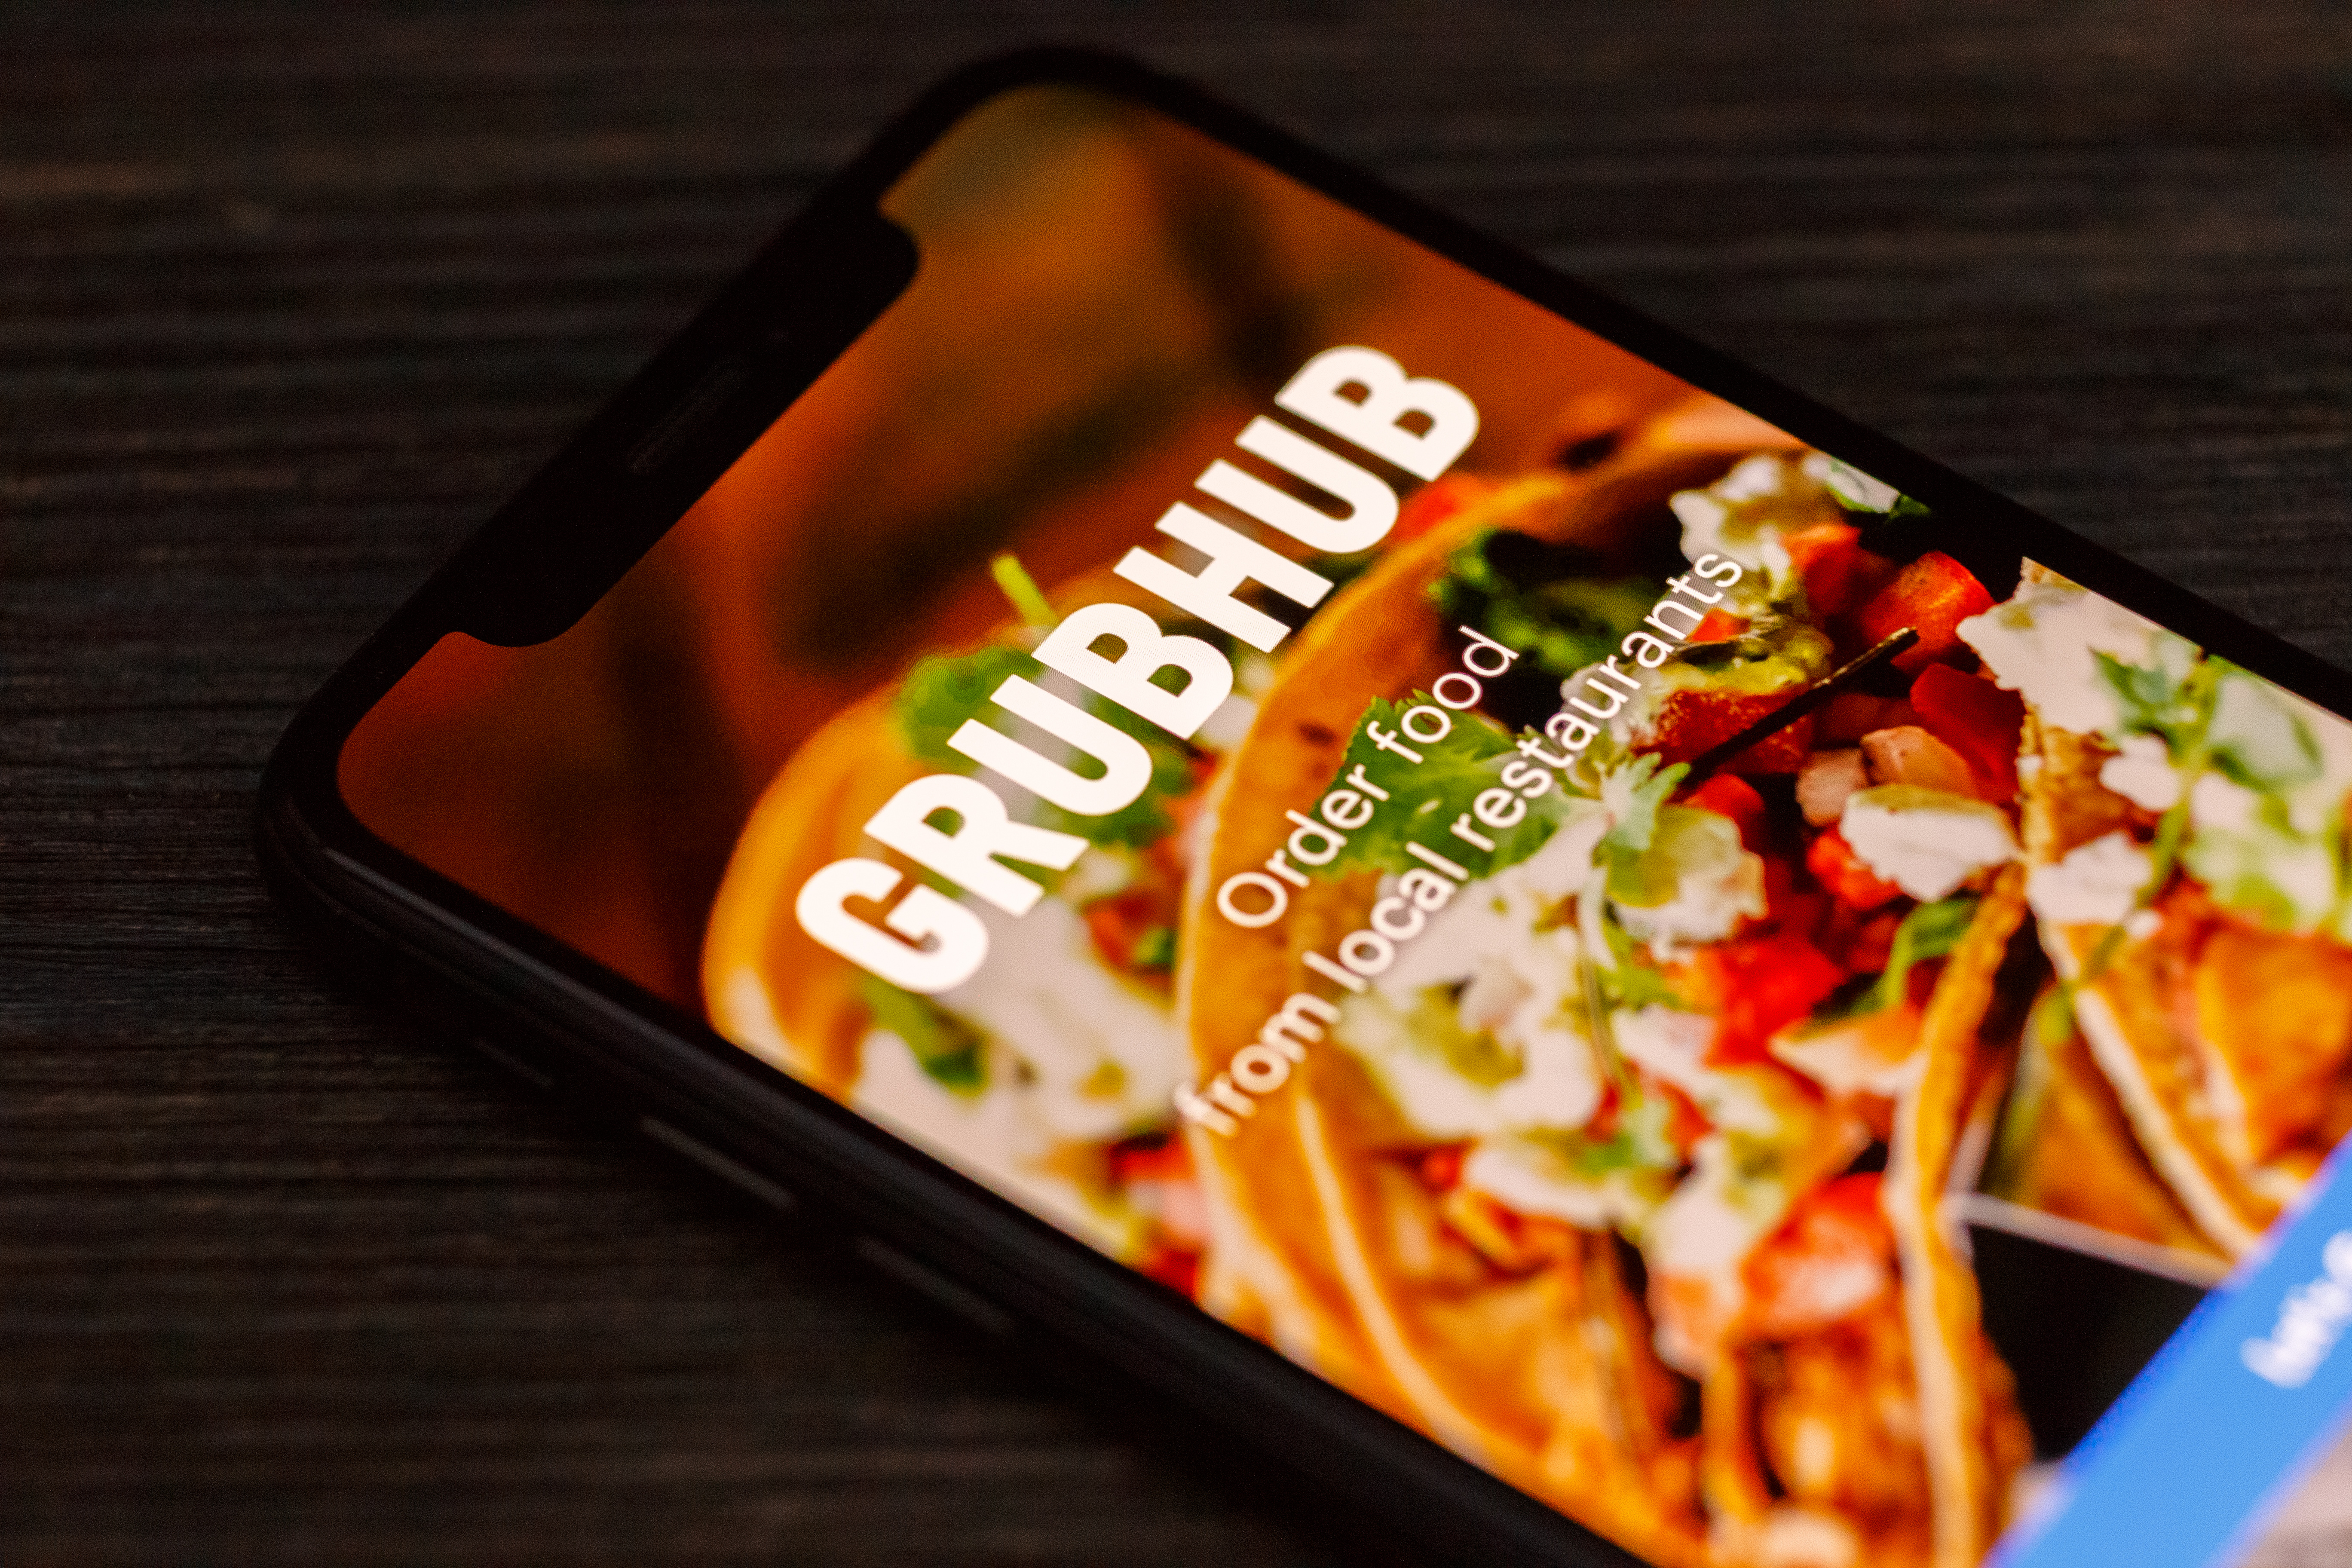 download free grubhub with amazon prime